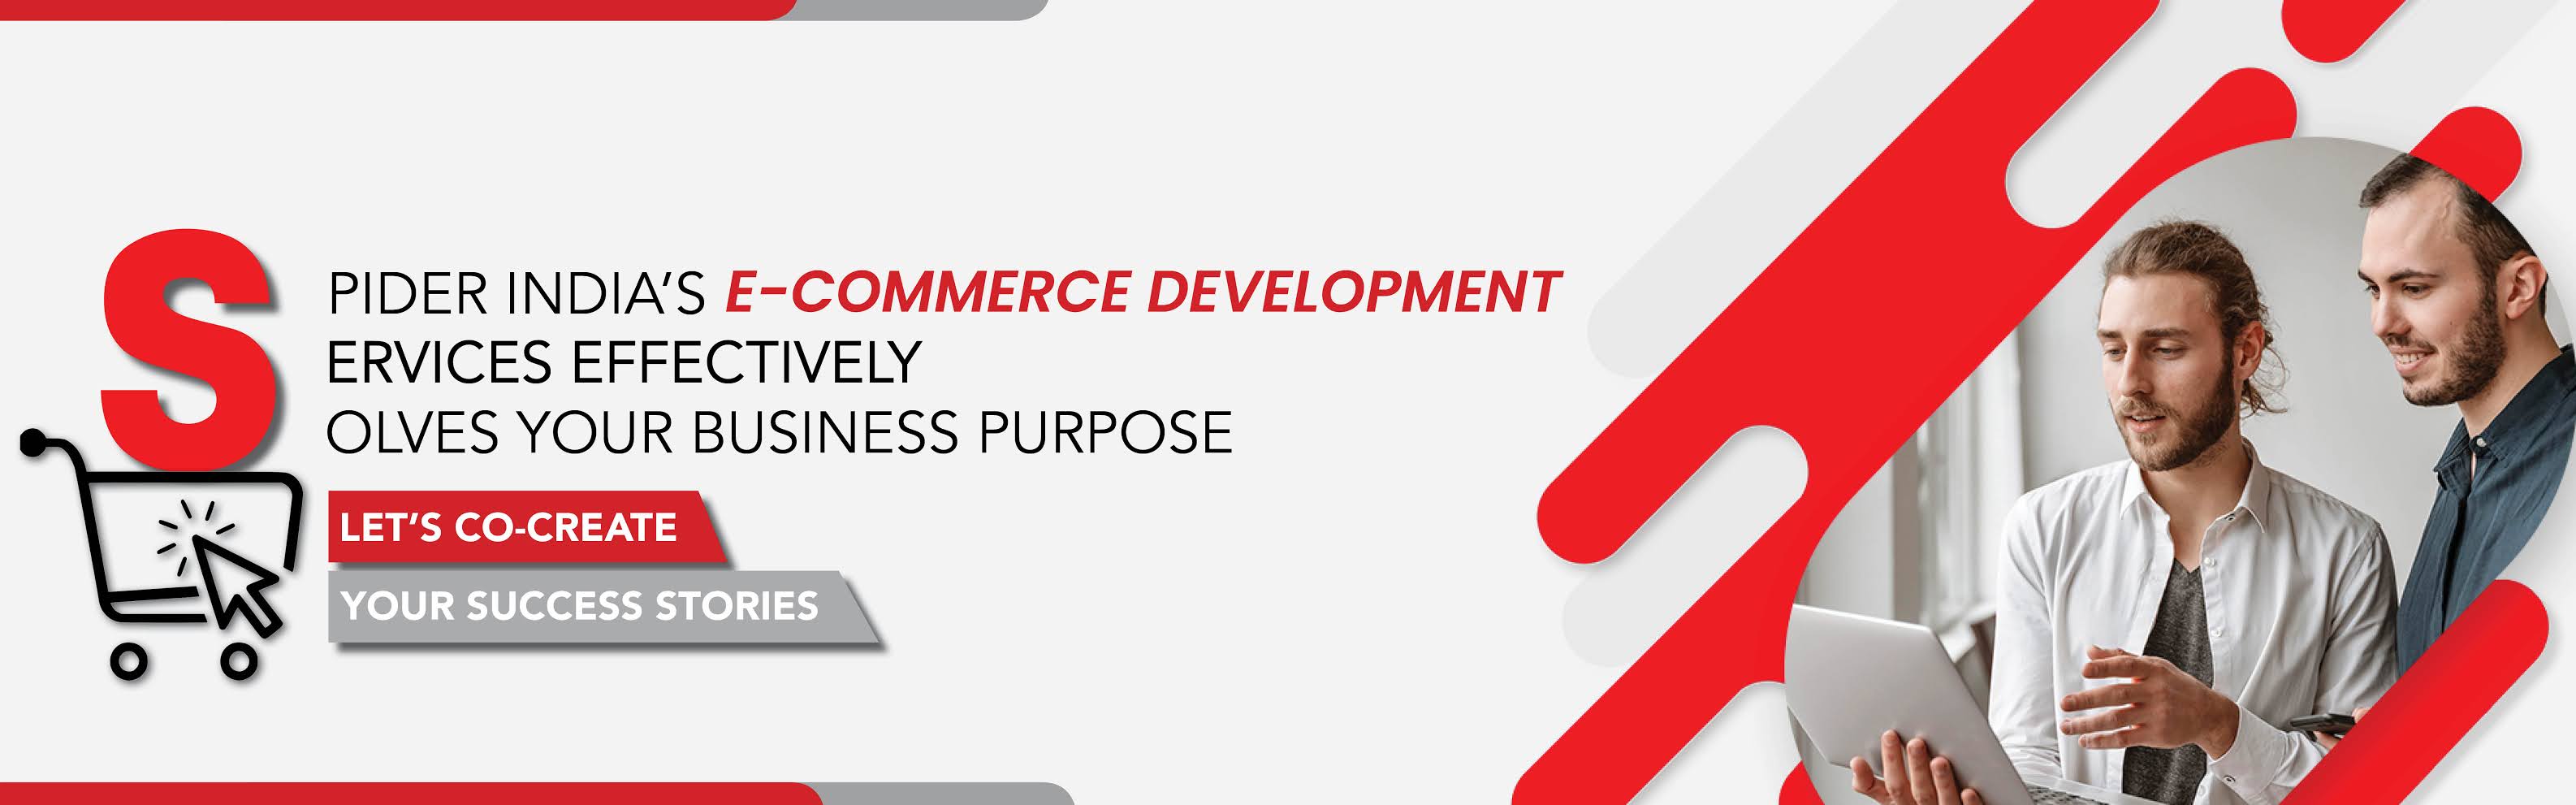 Ecommerce Website Development Company in Chennai, india